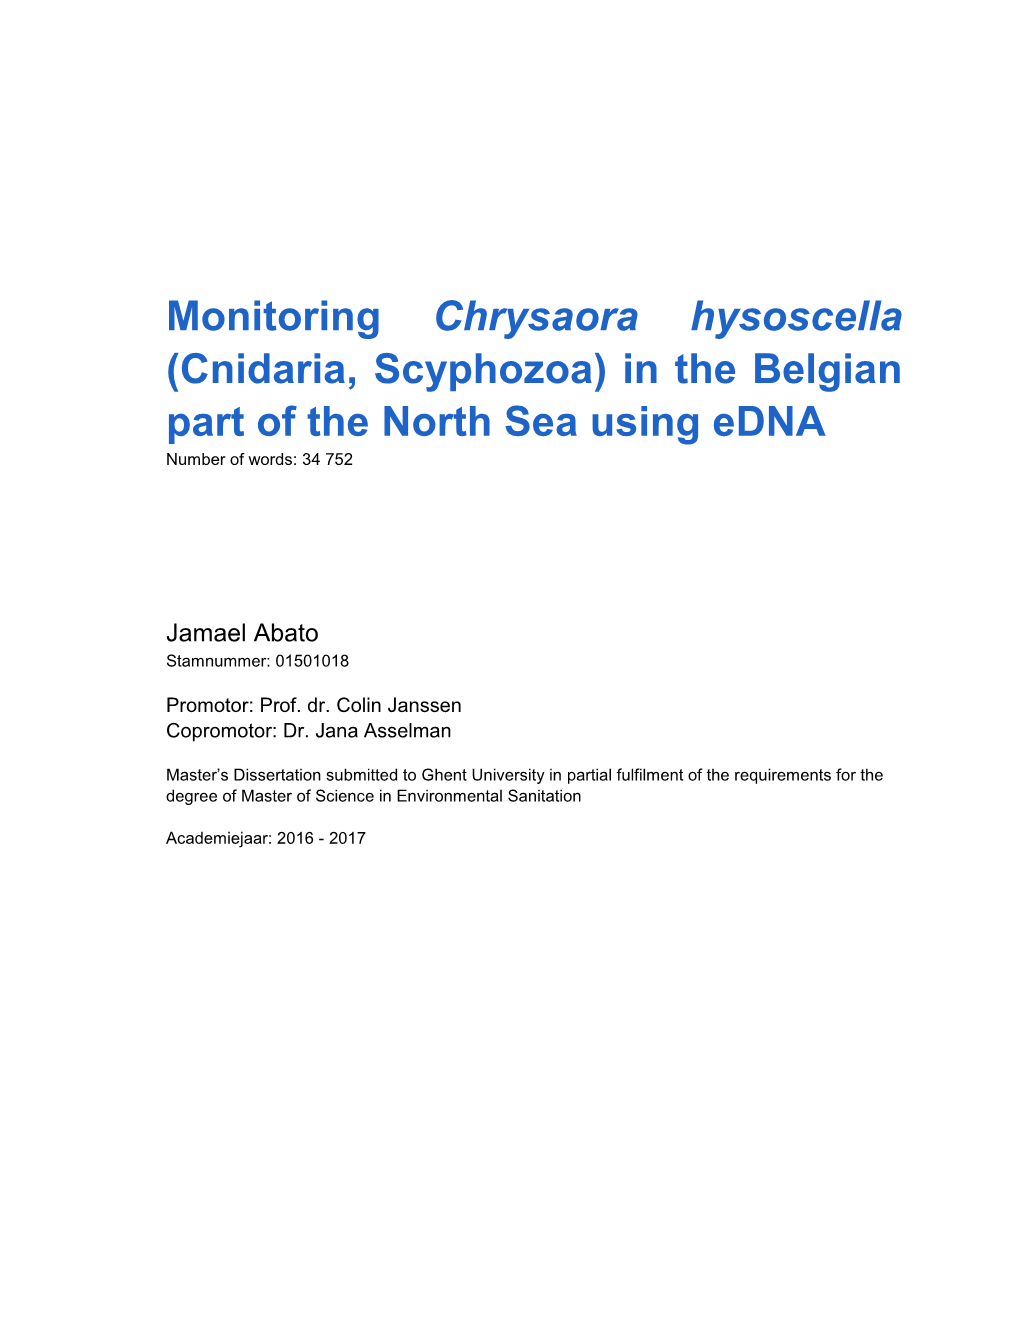 Monitoring Chrysaora Hysoscella (Cnidaria, Scyphozoa) in the Belgian Part of the North Sea Using Edna Number of Words: 34 752